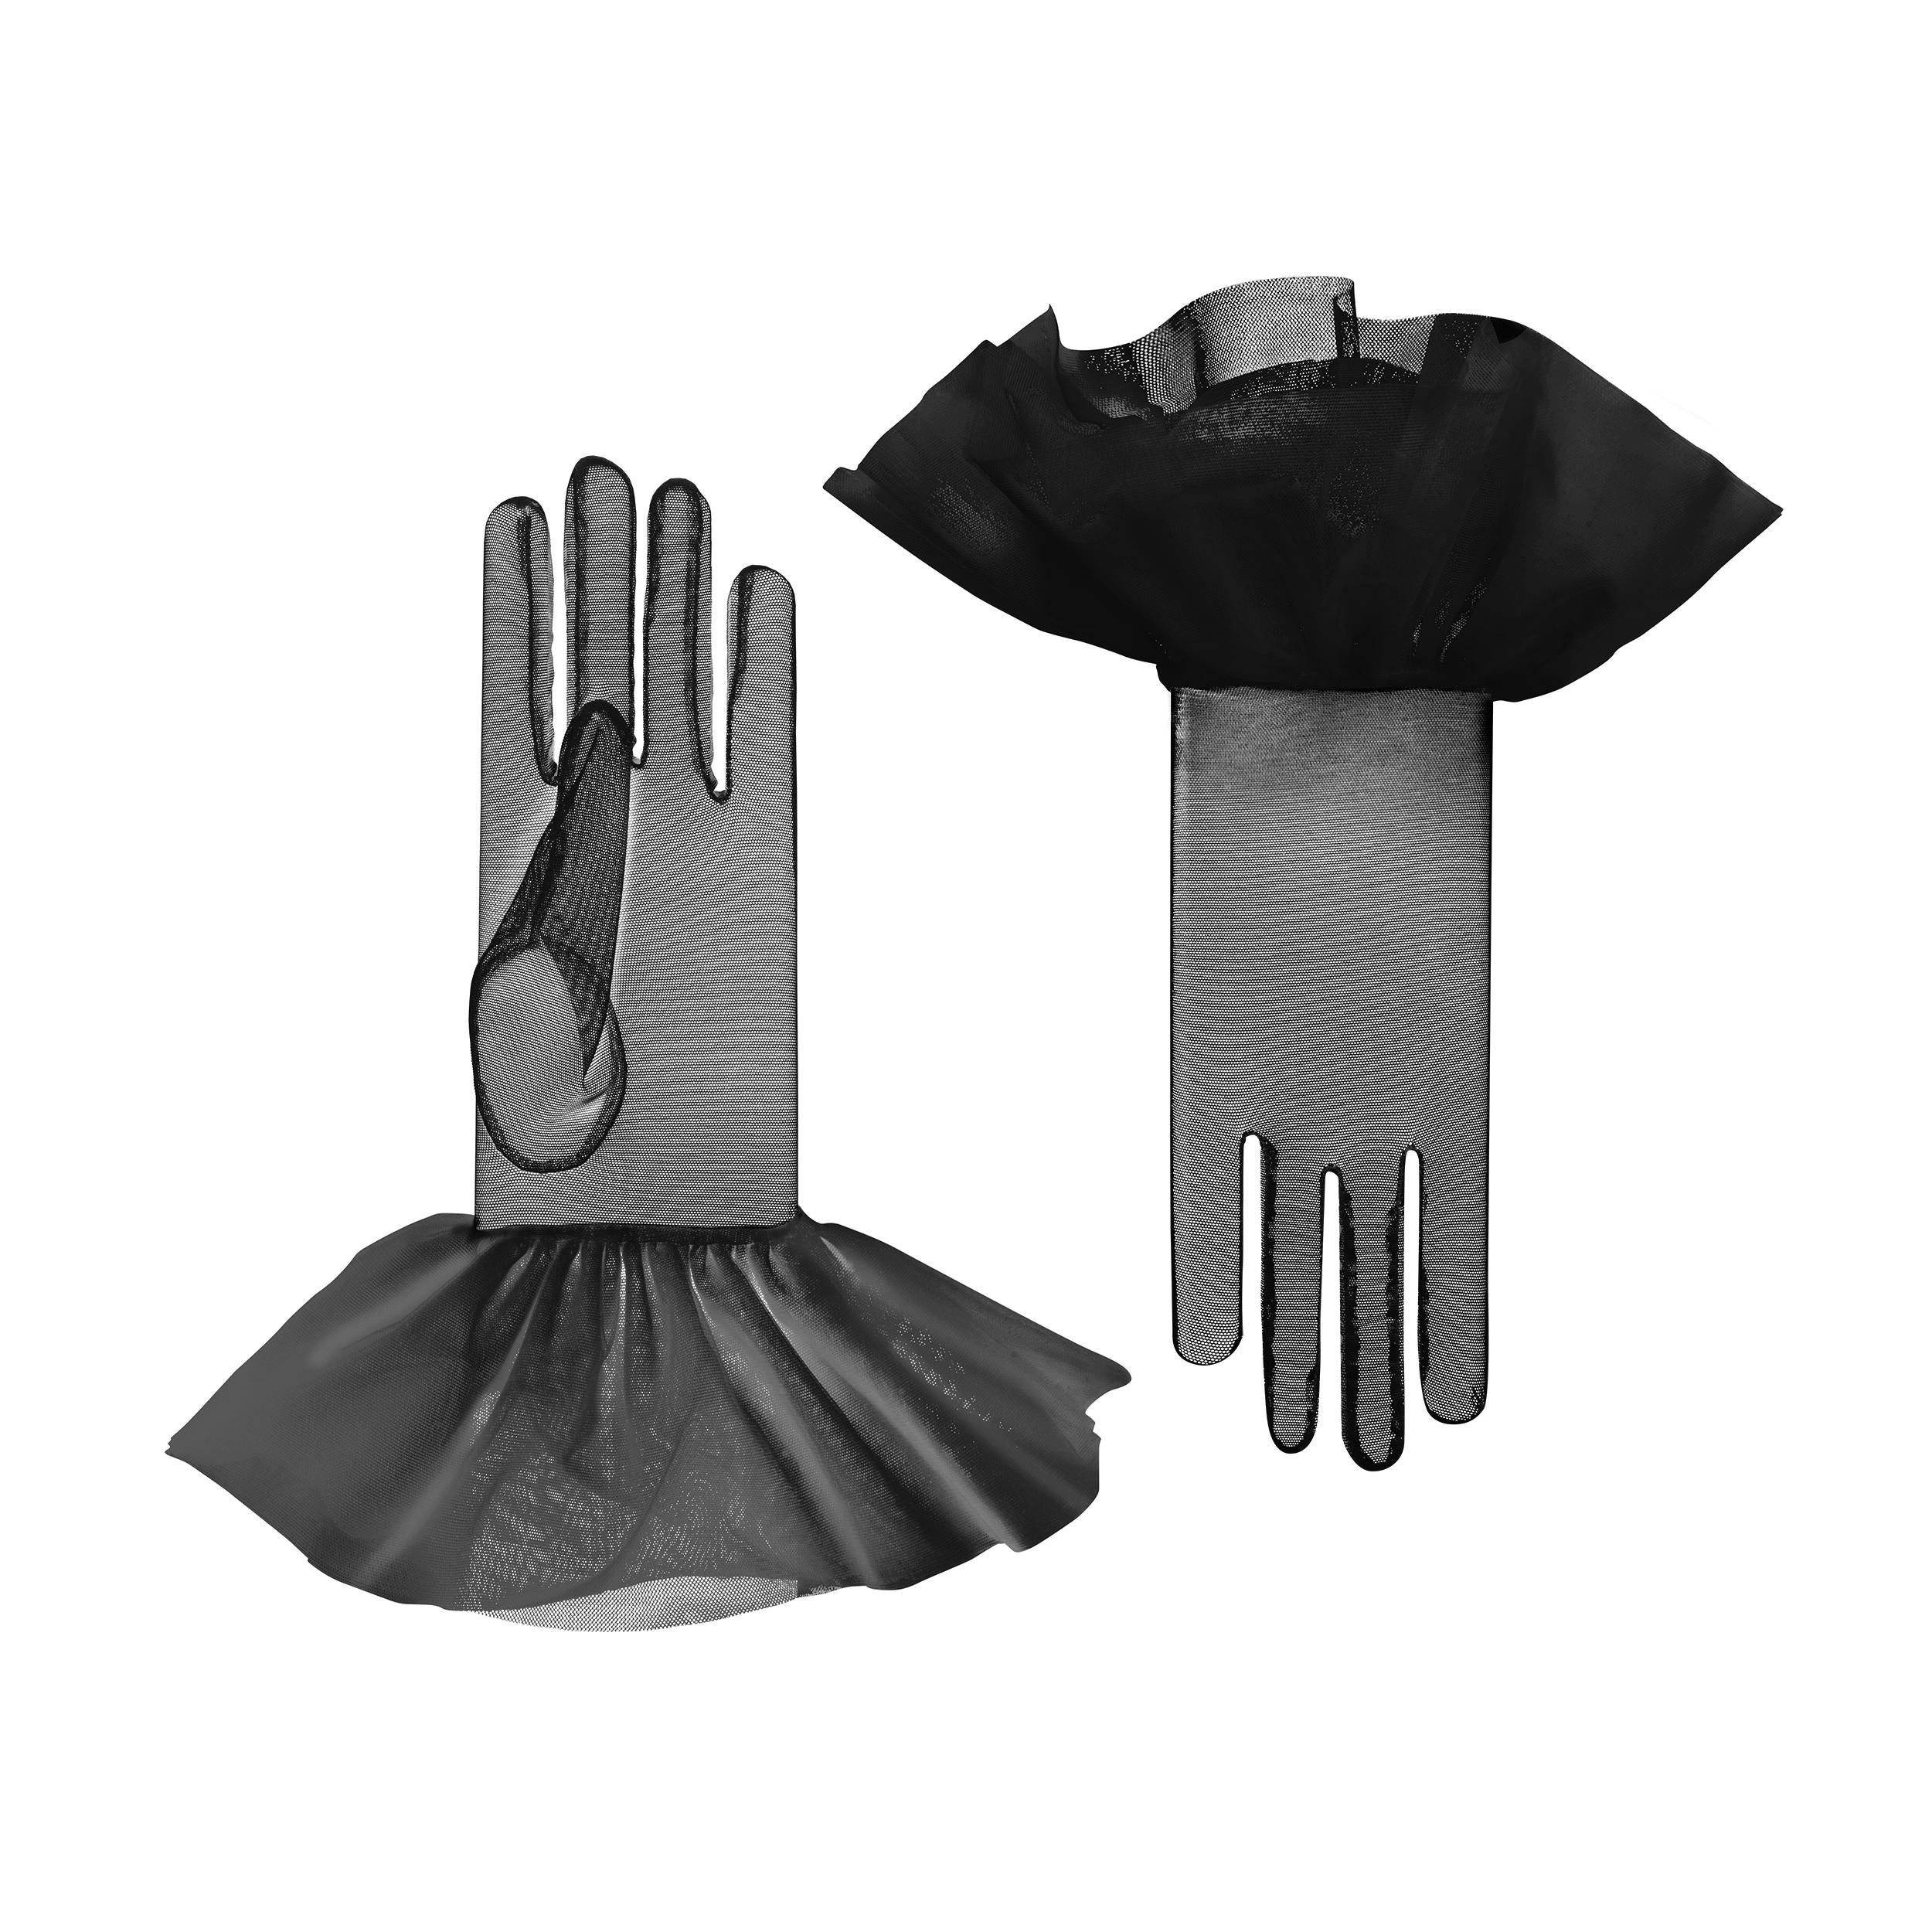 Cornelia James - Black Tulle Gloves with Harlequin Cuff - Lara - Size Large (8½) - Handmade Tulle Gloves by Cornelia James product